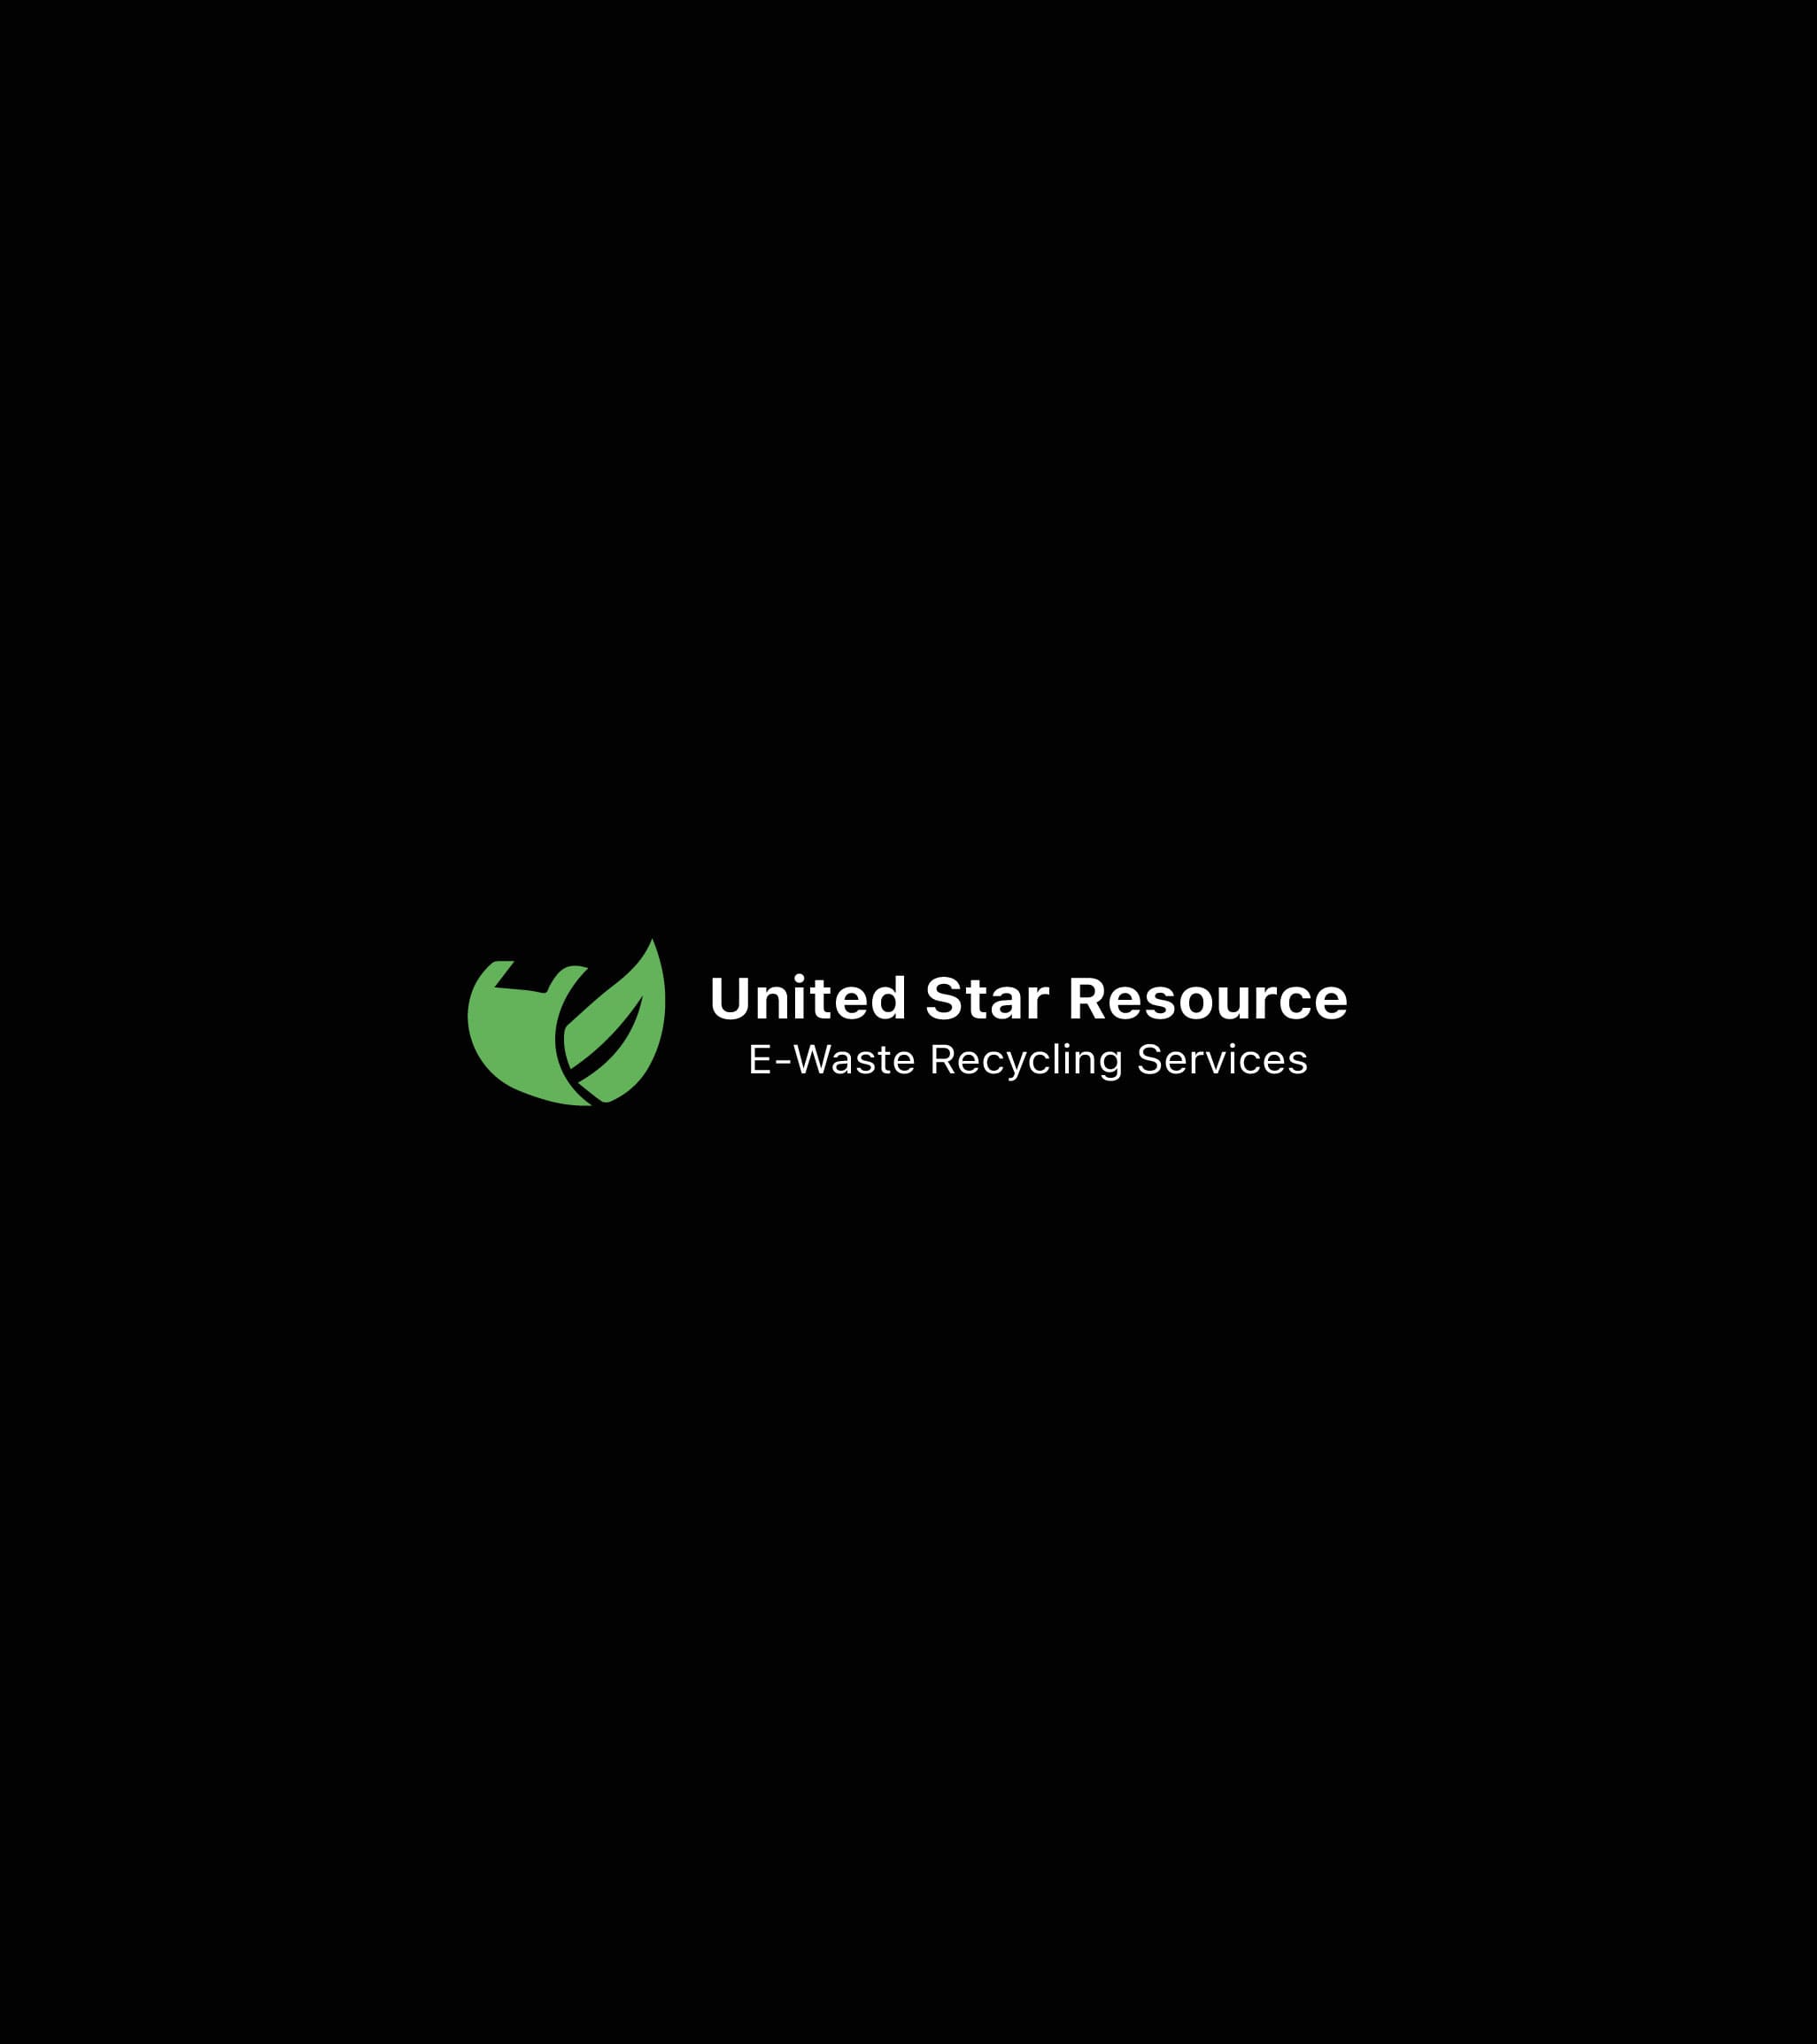 united star resource mmhf